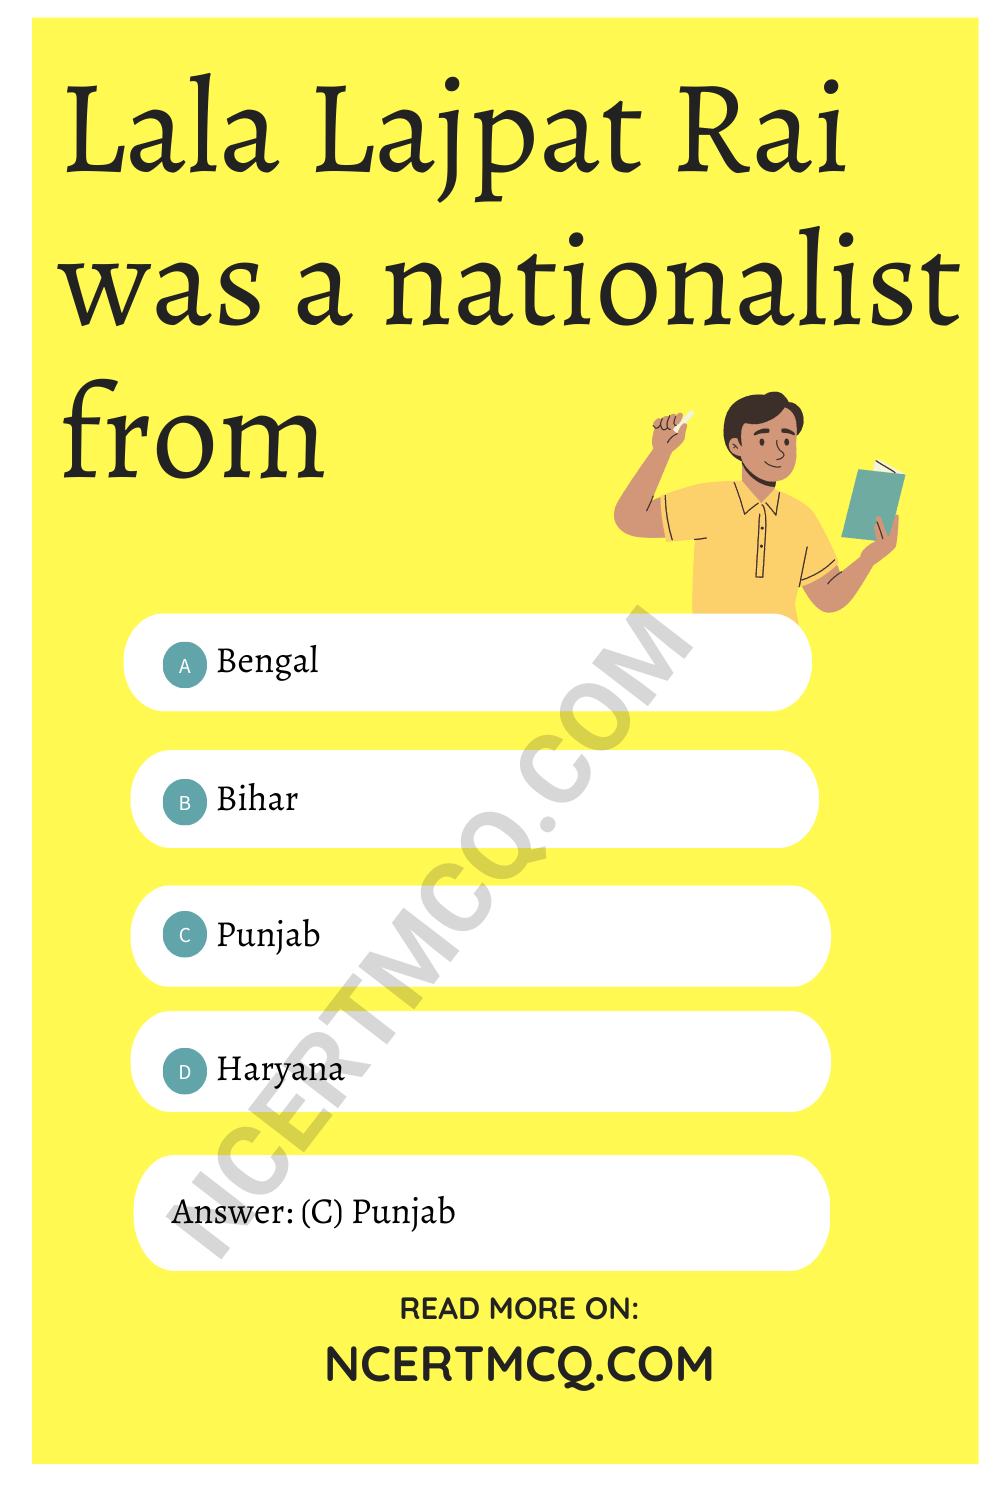 Lala Lajpat Rai was a nationalist from